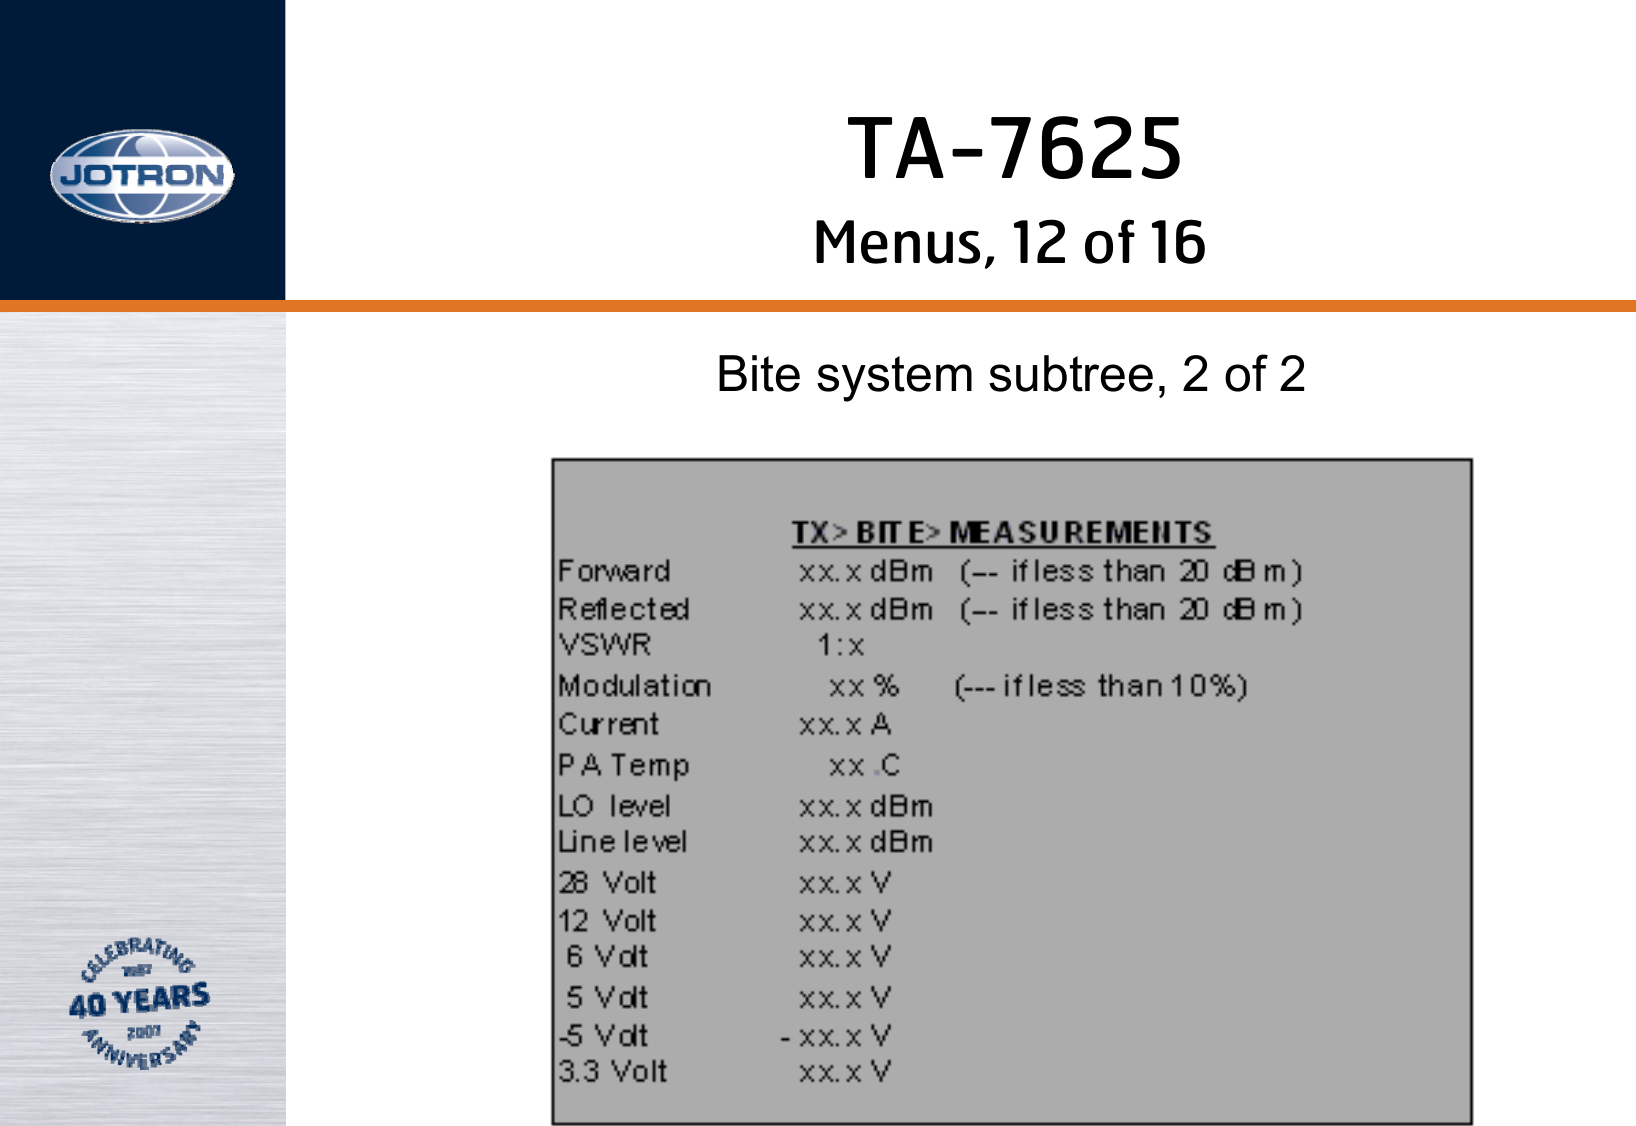 Menus, 12 of 16Bite system subtree, 2 of 2TA-7625